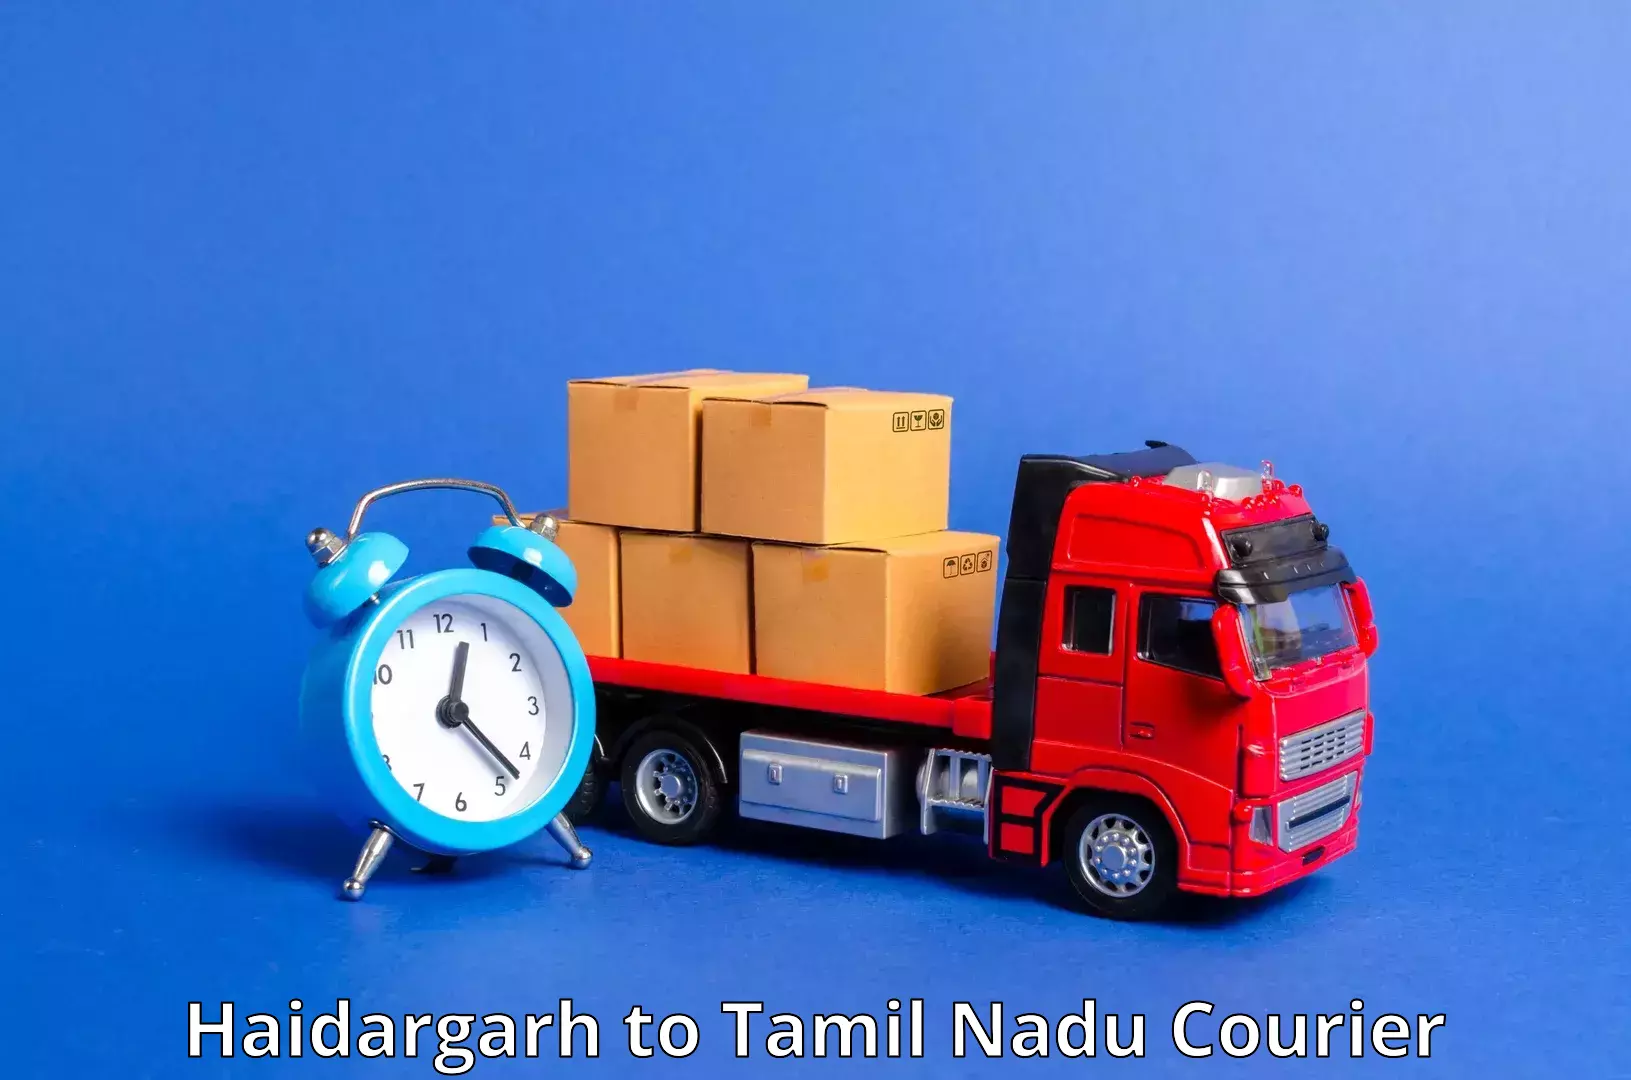 Reliable shipping solutions Haidargarh to Nagapattinam